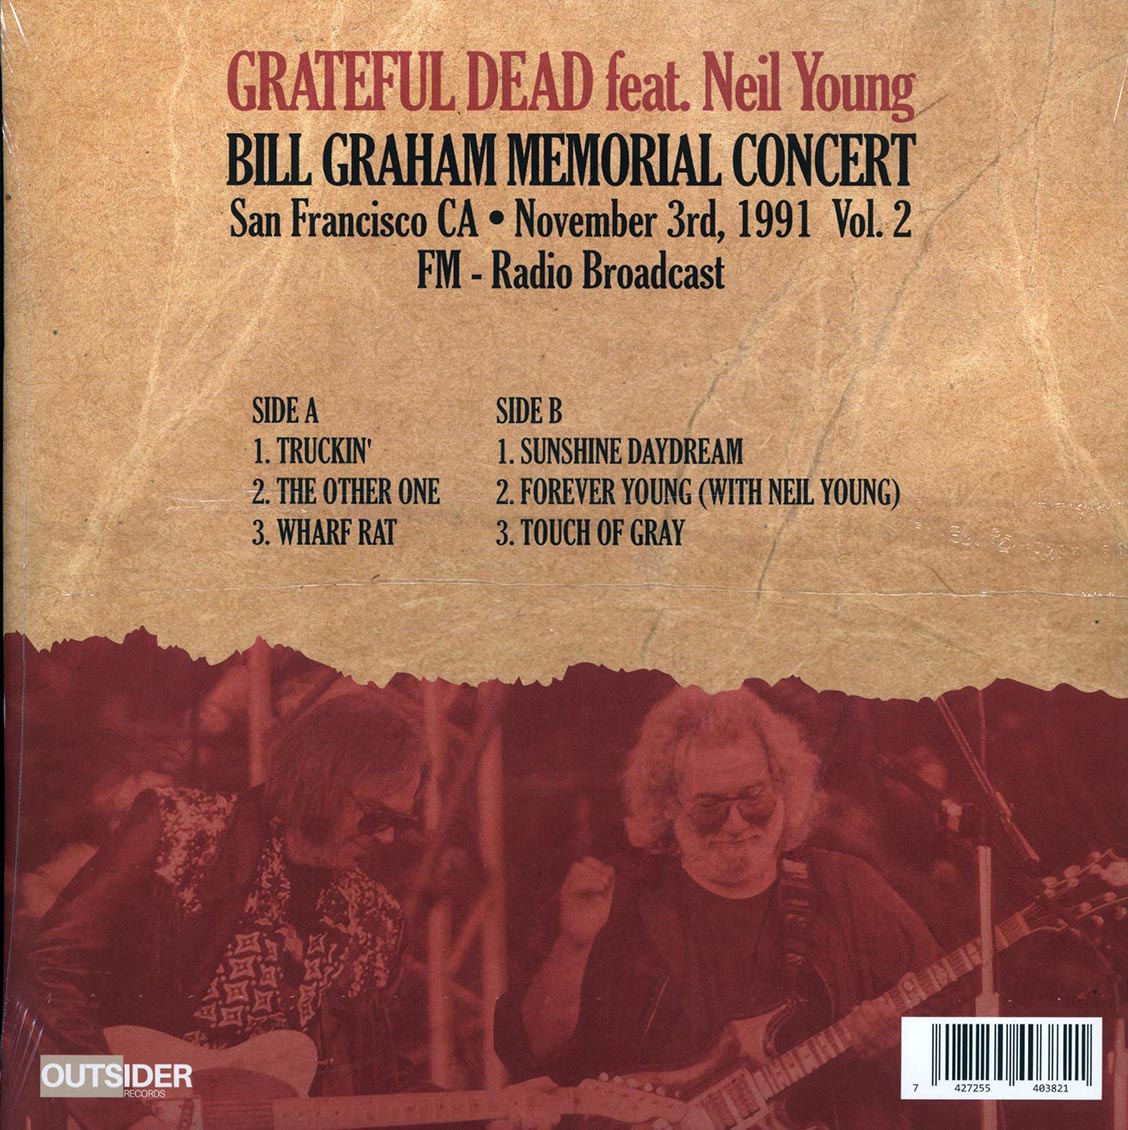 Grateful Dead, Neil Young - Bill Graham Memorial Concert Volume 2: San Francisco CA, November 3rd, 1991 (ltd. 500 copies made) (gold vinyl) - Vinyl LP, LP